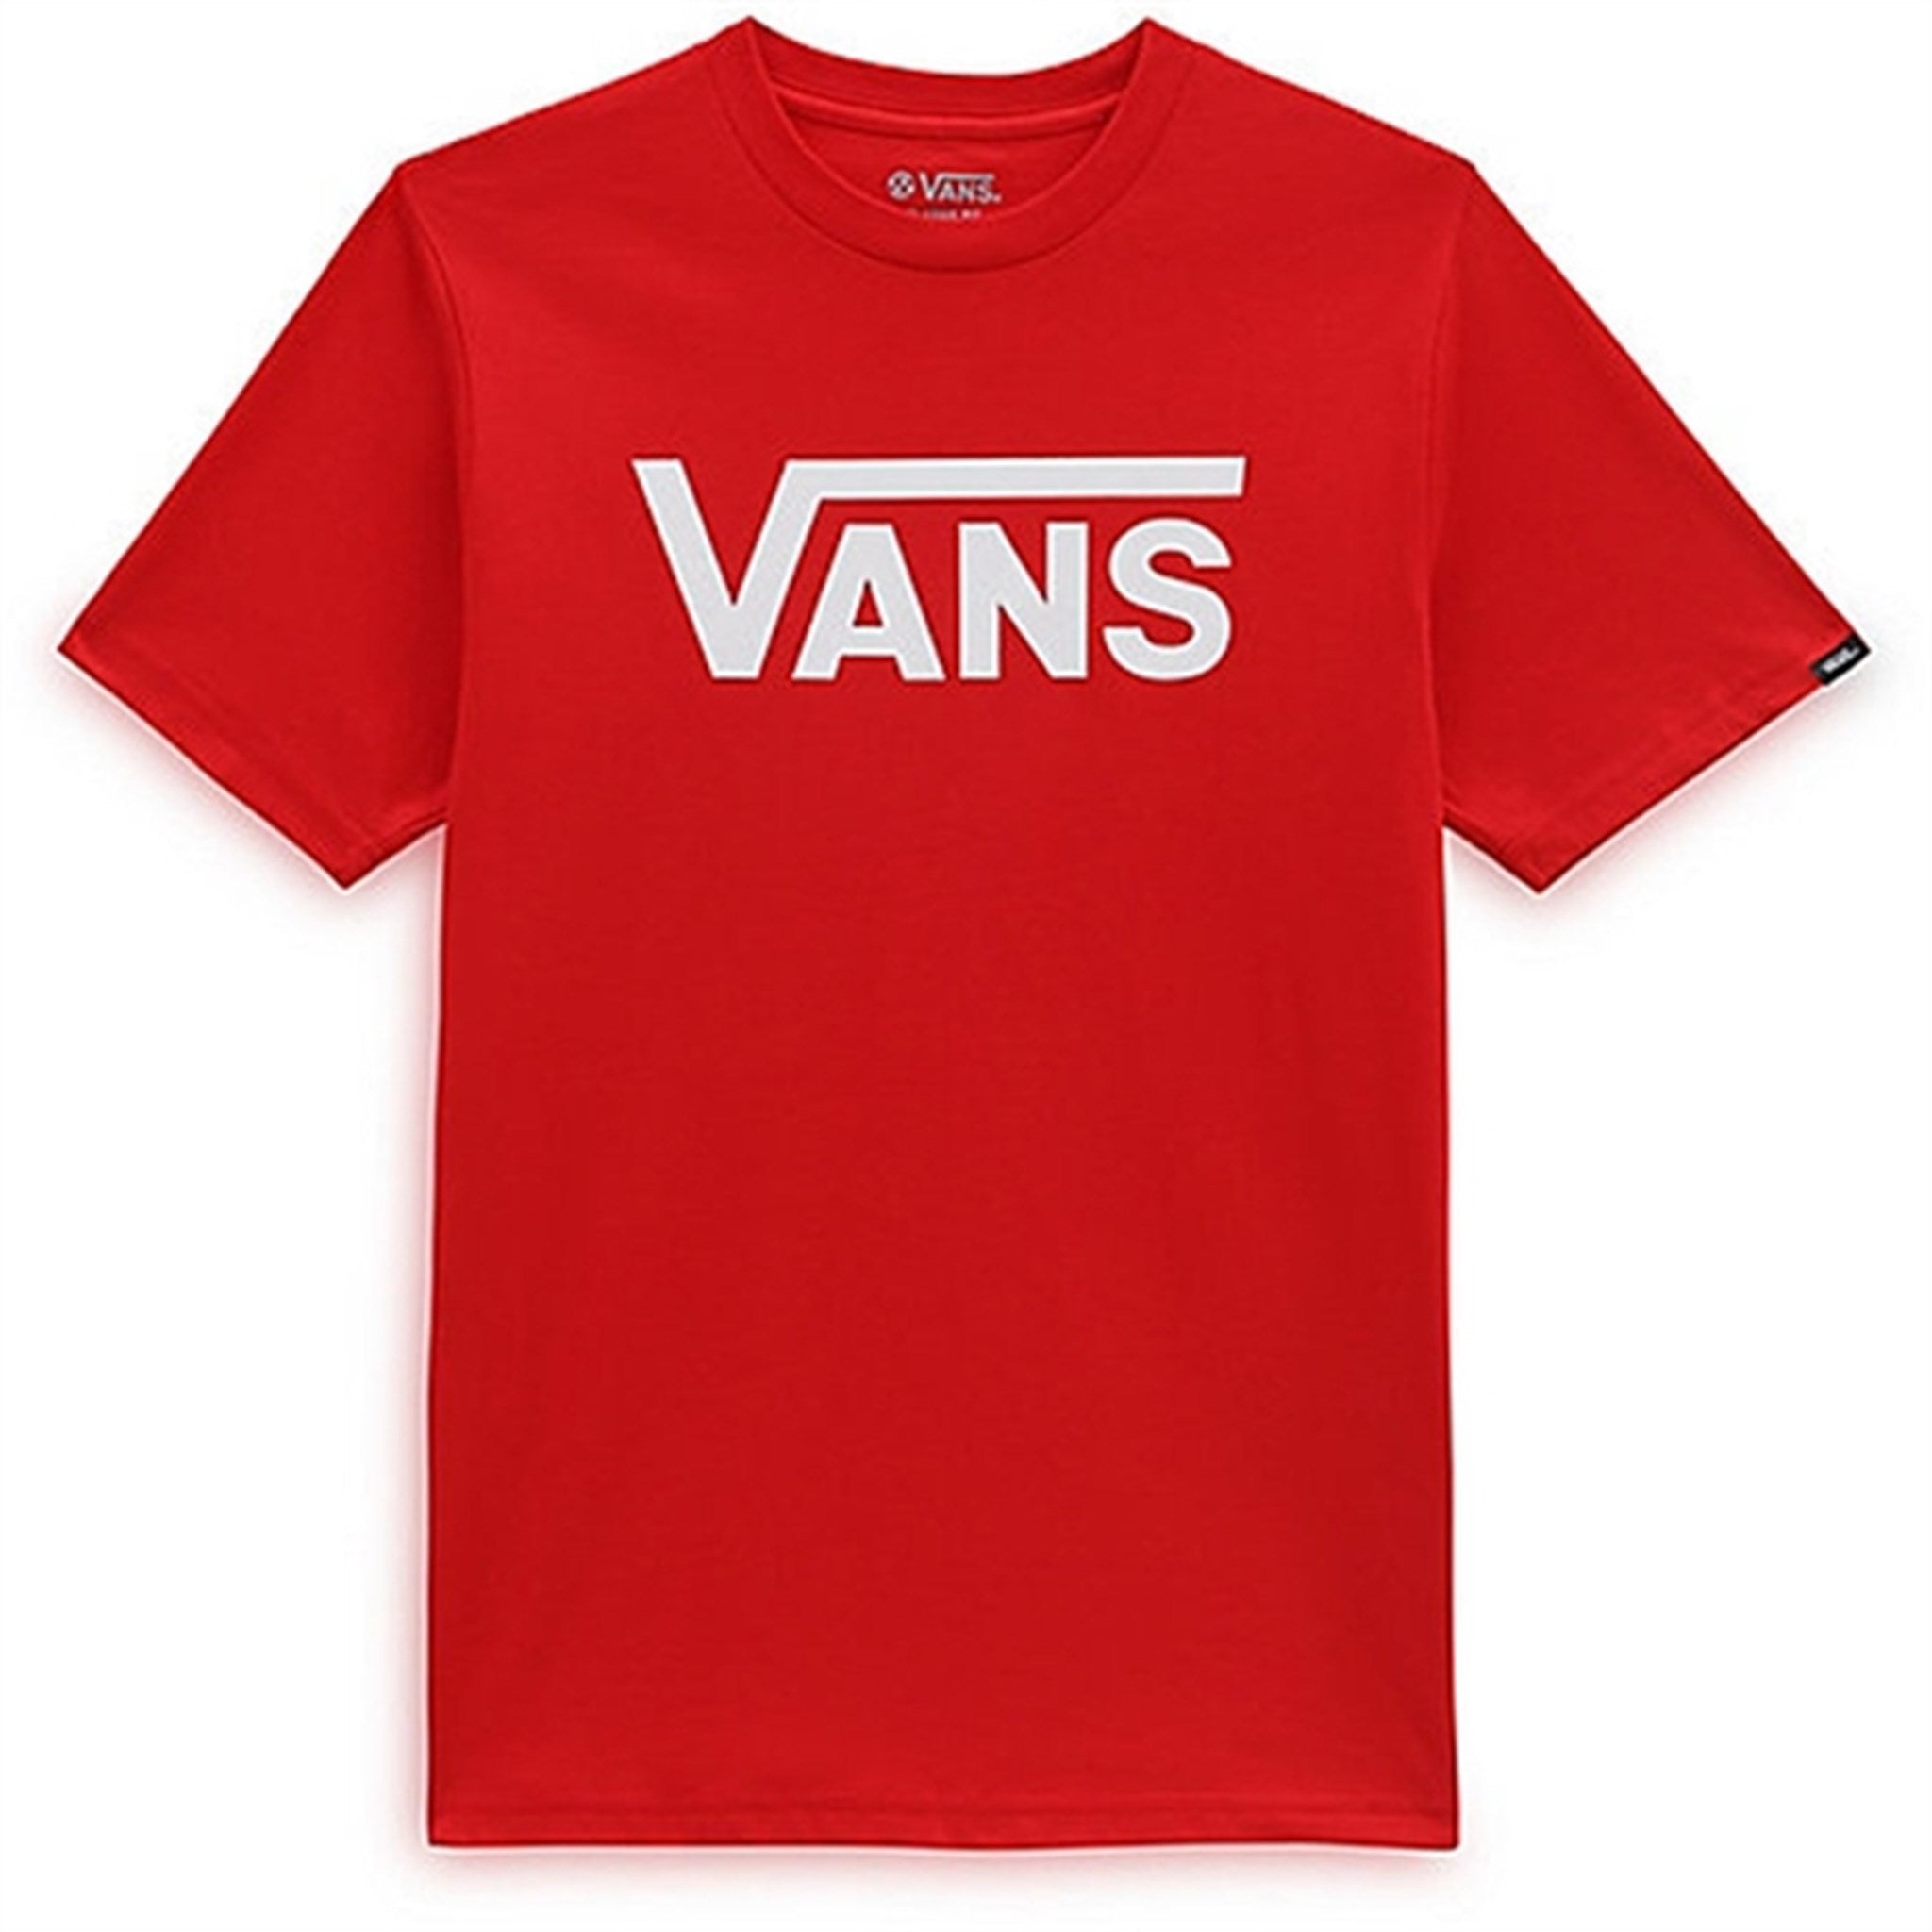 VANS By Vans Classic Boys T-Shirt True Red/White